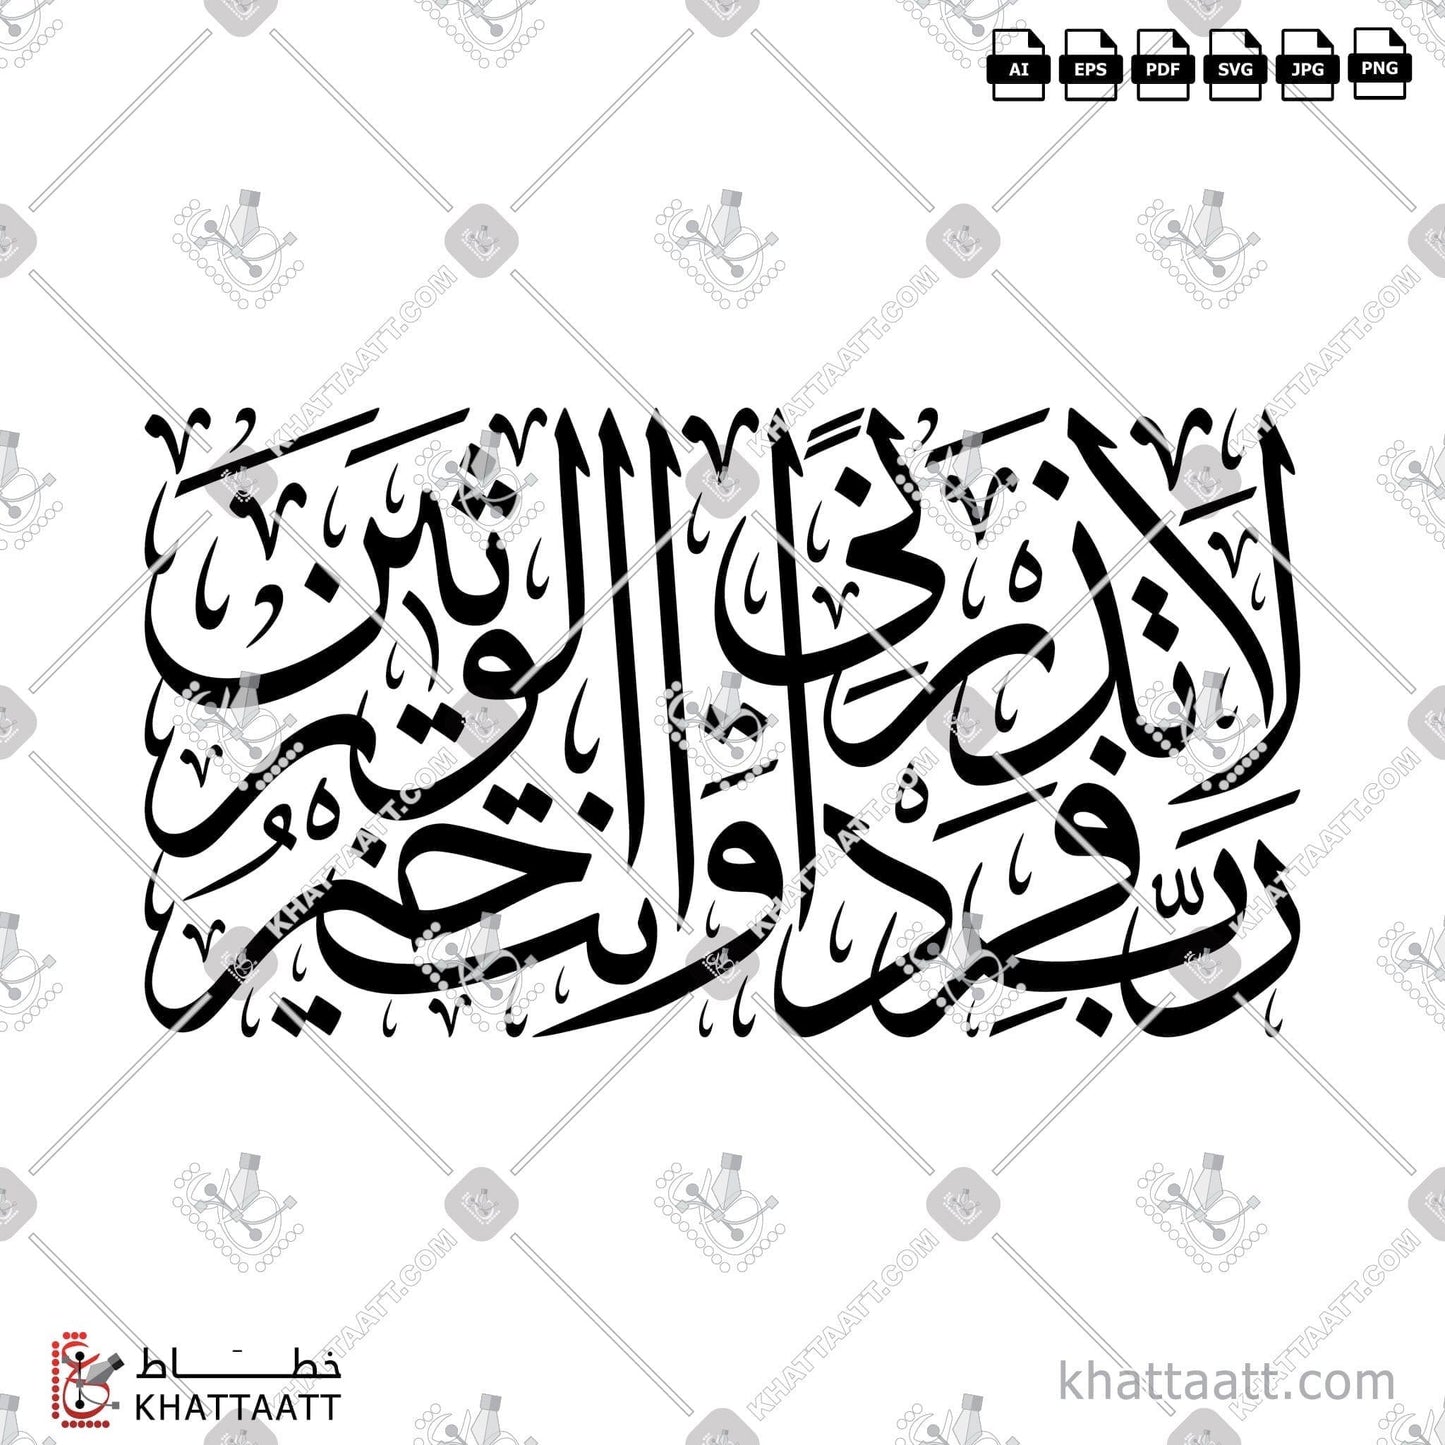 Download Arabic Calligraphy of رب لا تذرني فردا وأنت خير الوارثين in Thuluth - خط الثلث in vector and .png